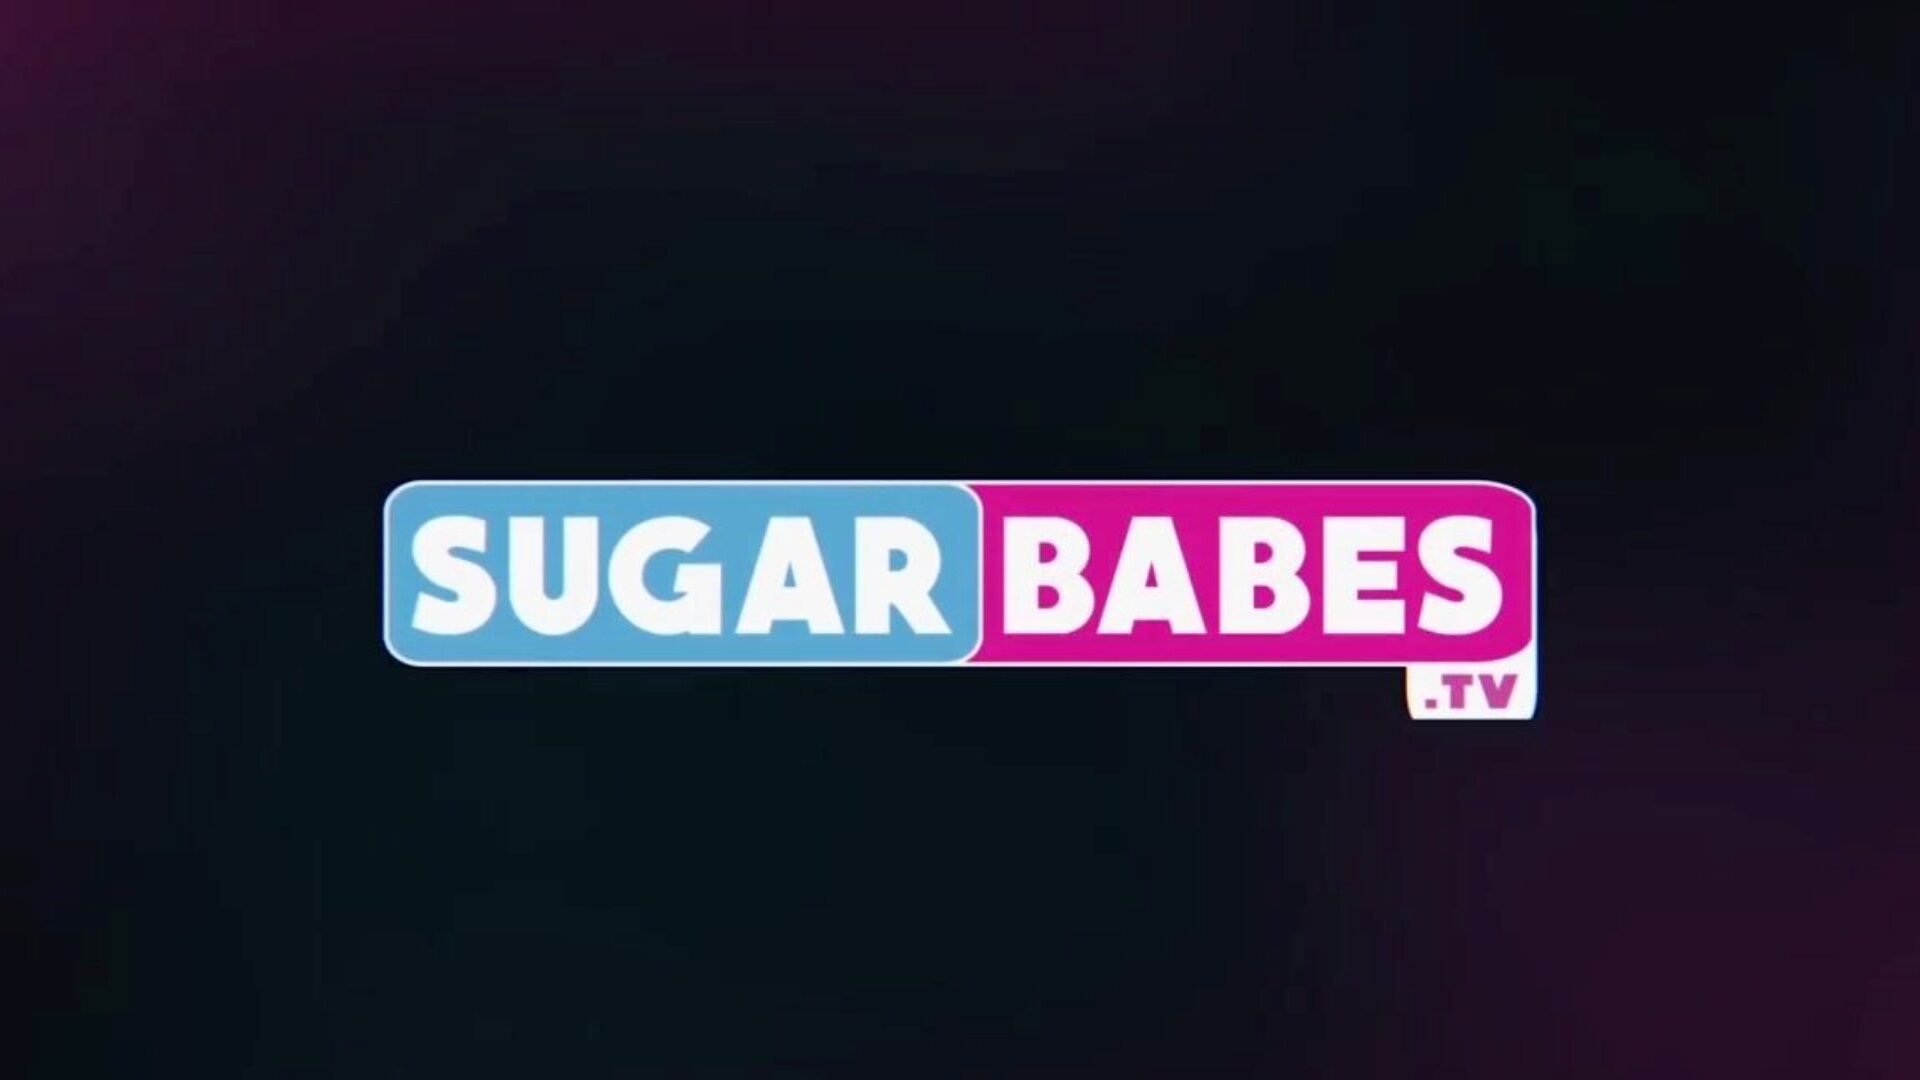 sugarbabestv瓶，免费的糖蜂蜜电视高清色情6b观看xhamster上的sugarbabestv瓶视频，最好的hd做爱网站上有大量的免费的辣妹电视性爱和色情视频